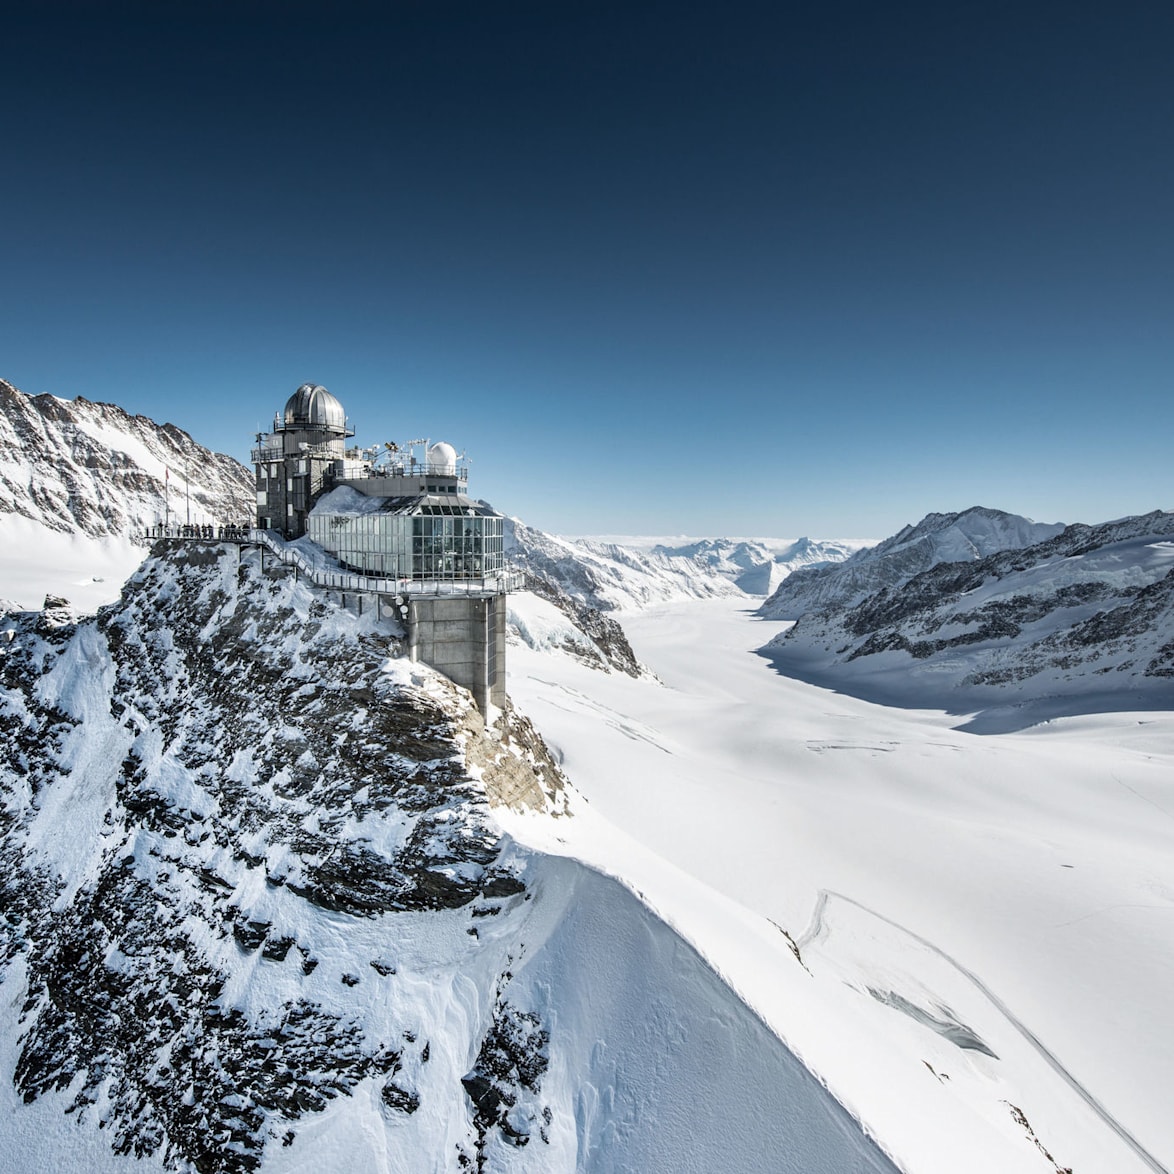 Sphinx aletschgletscher jungfraujoch top of europe